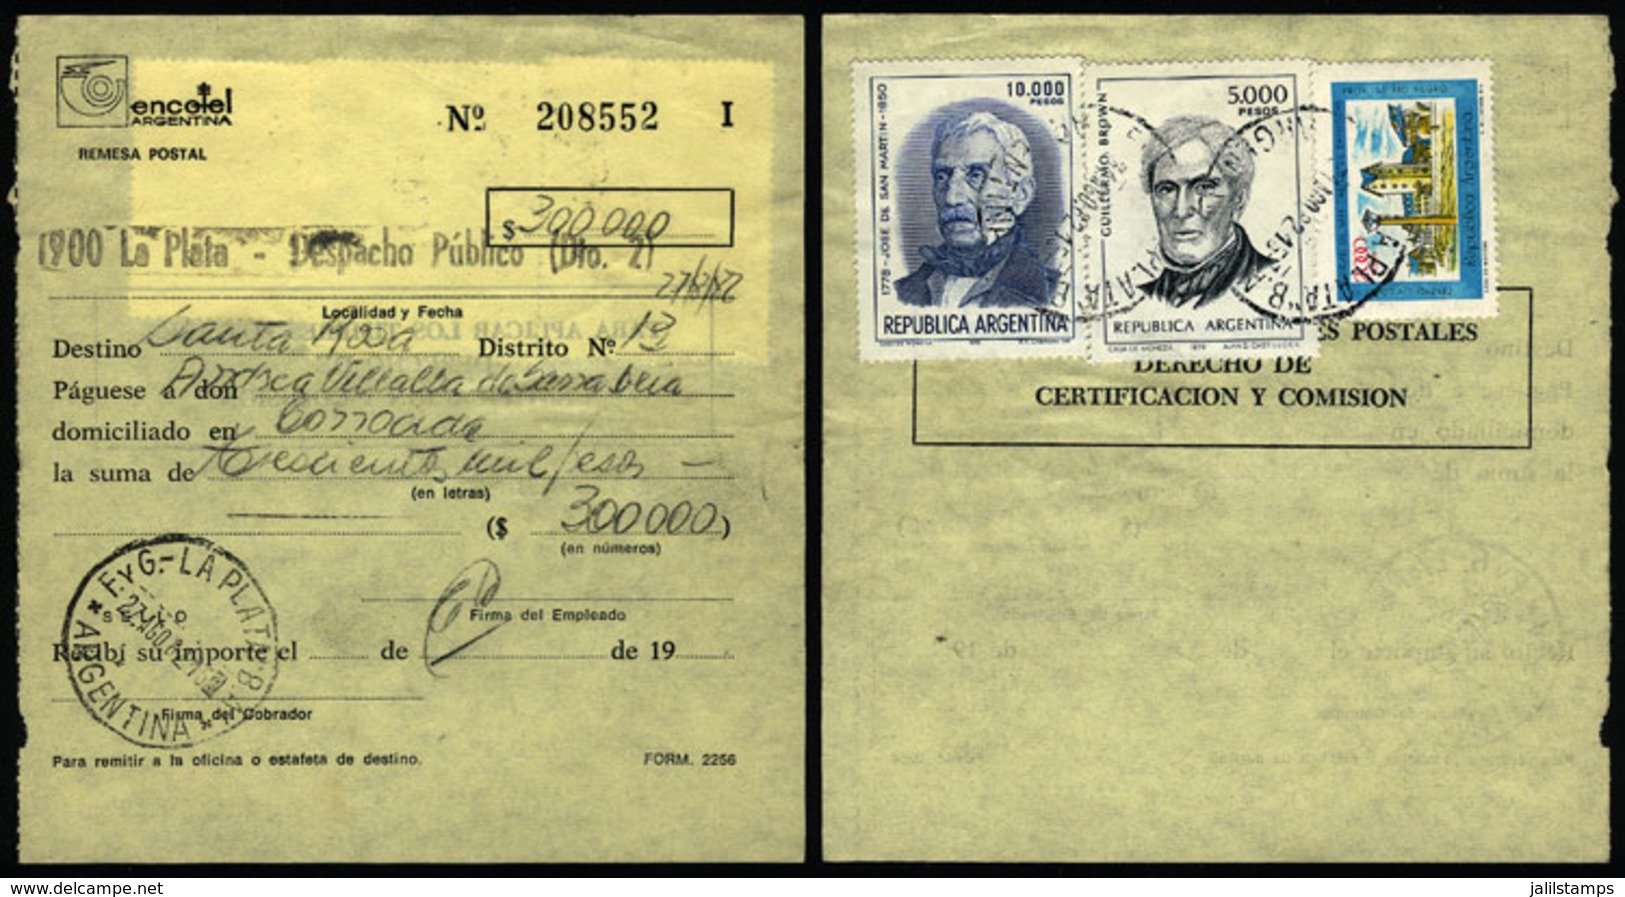 ARGENTINA: Postal Money Order Sent From La Plata To Santa Rosa On 27/AU/1982, With INFLA Postage Of $17,000, VF Quality - Cartas & Documentos